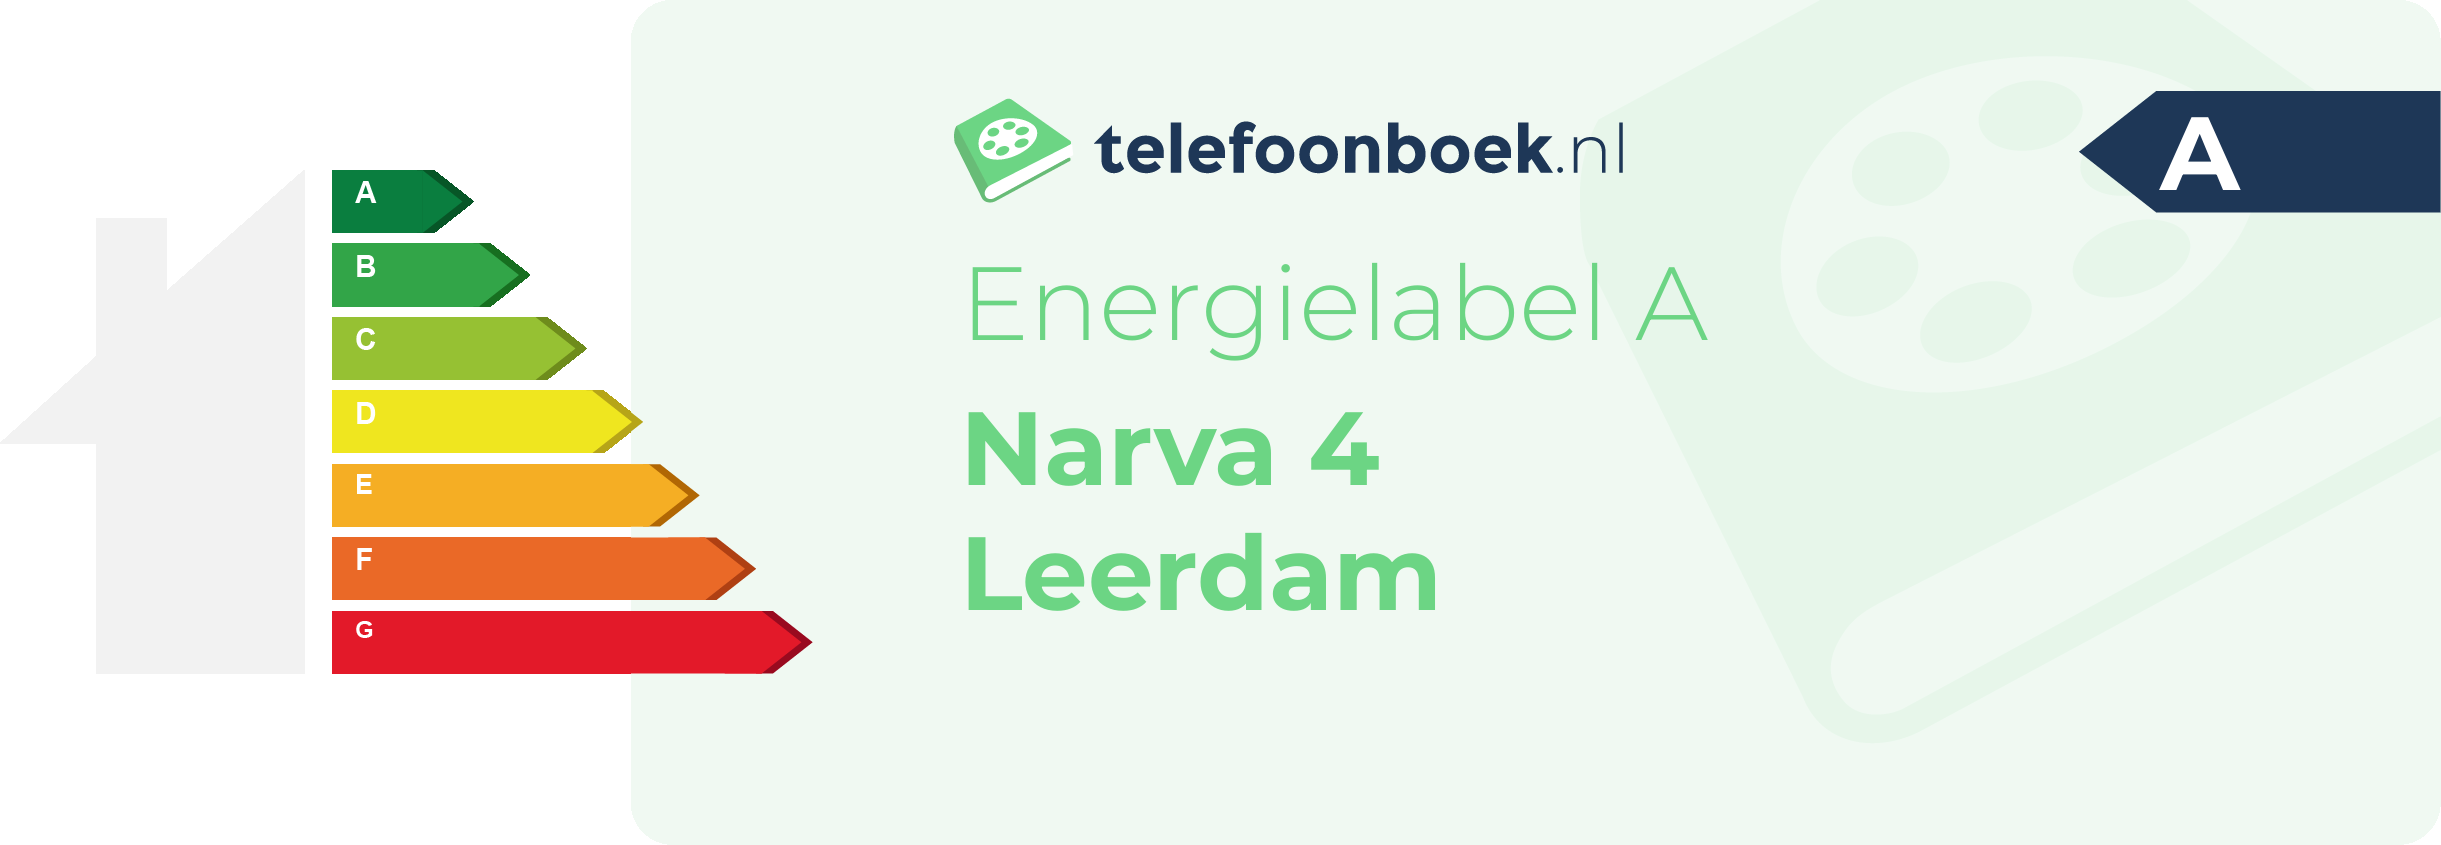 Energielabel Narva 4 Leerdam